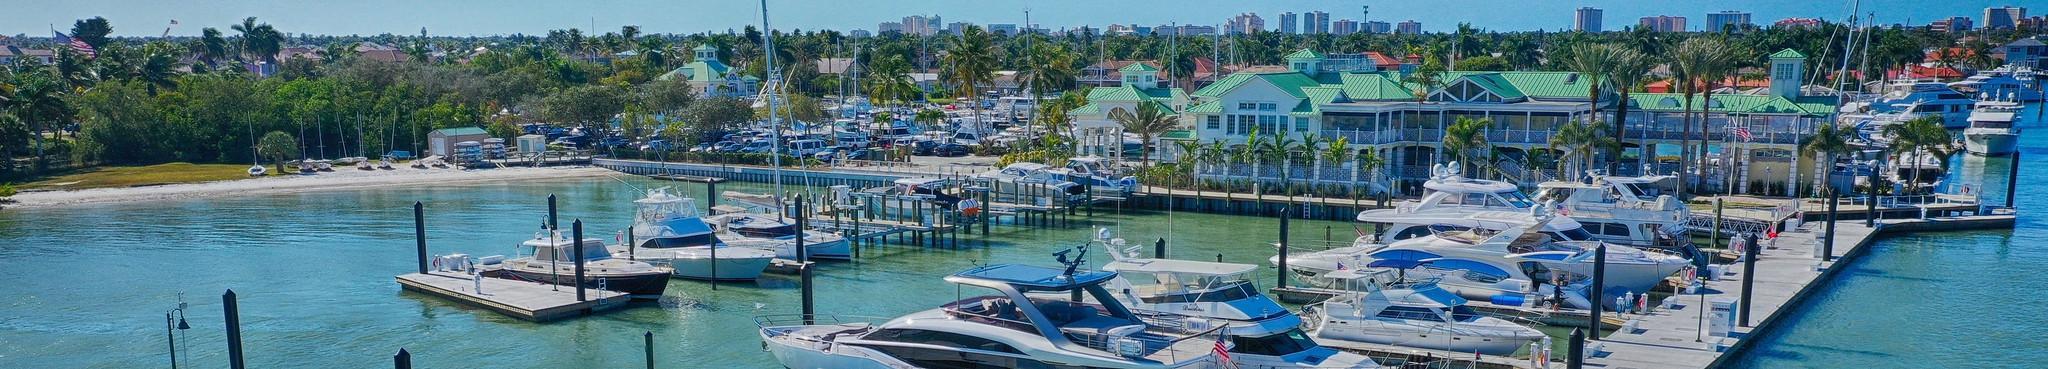 marco island yacht club slips for sale